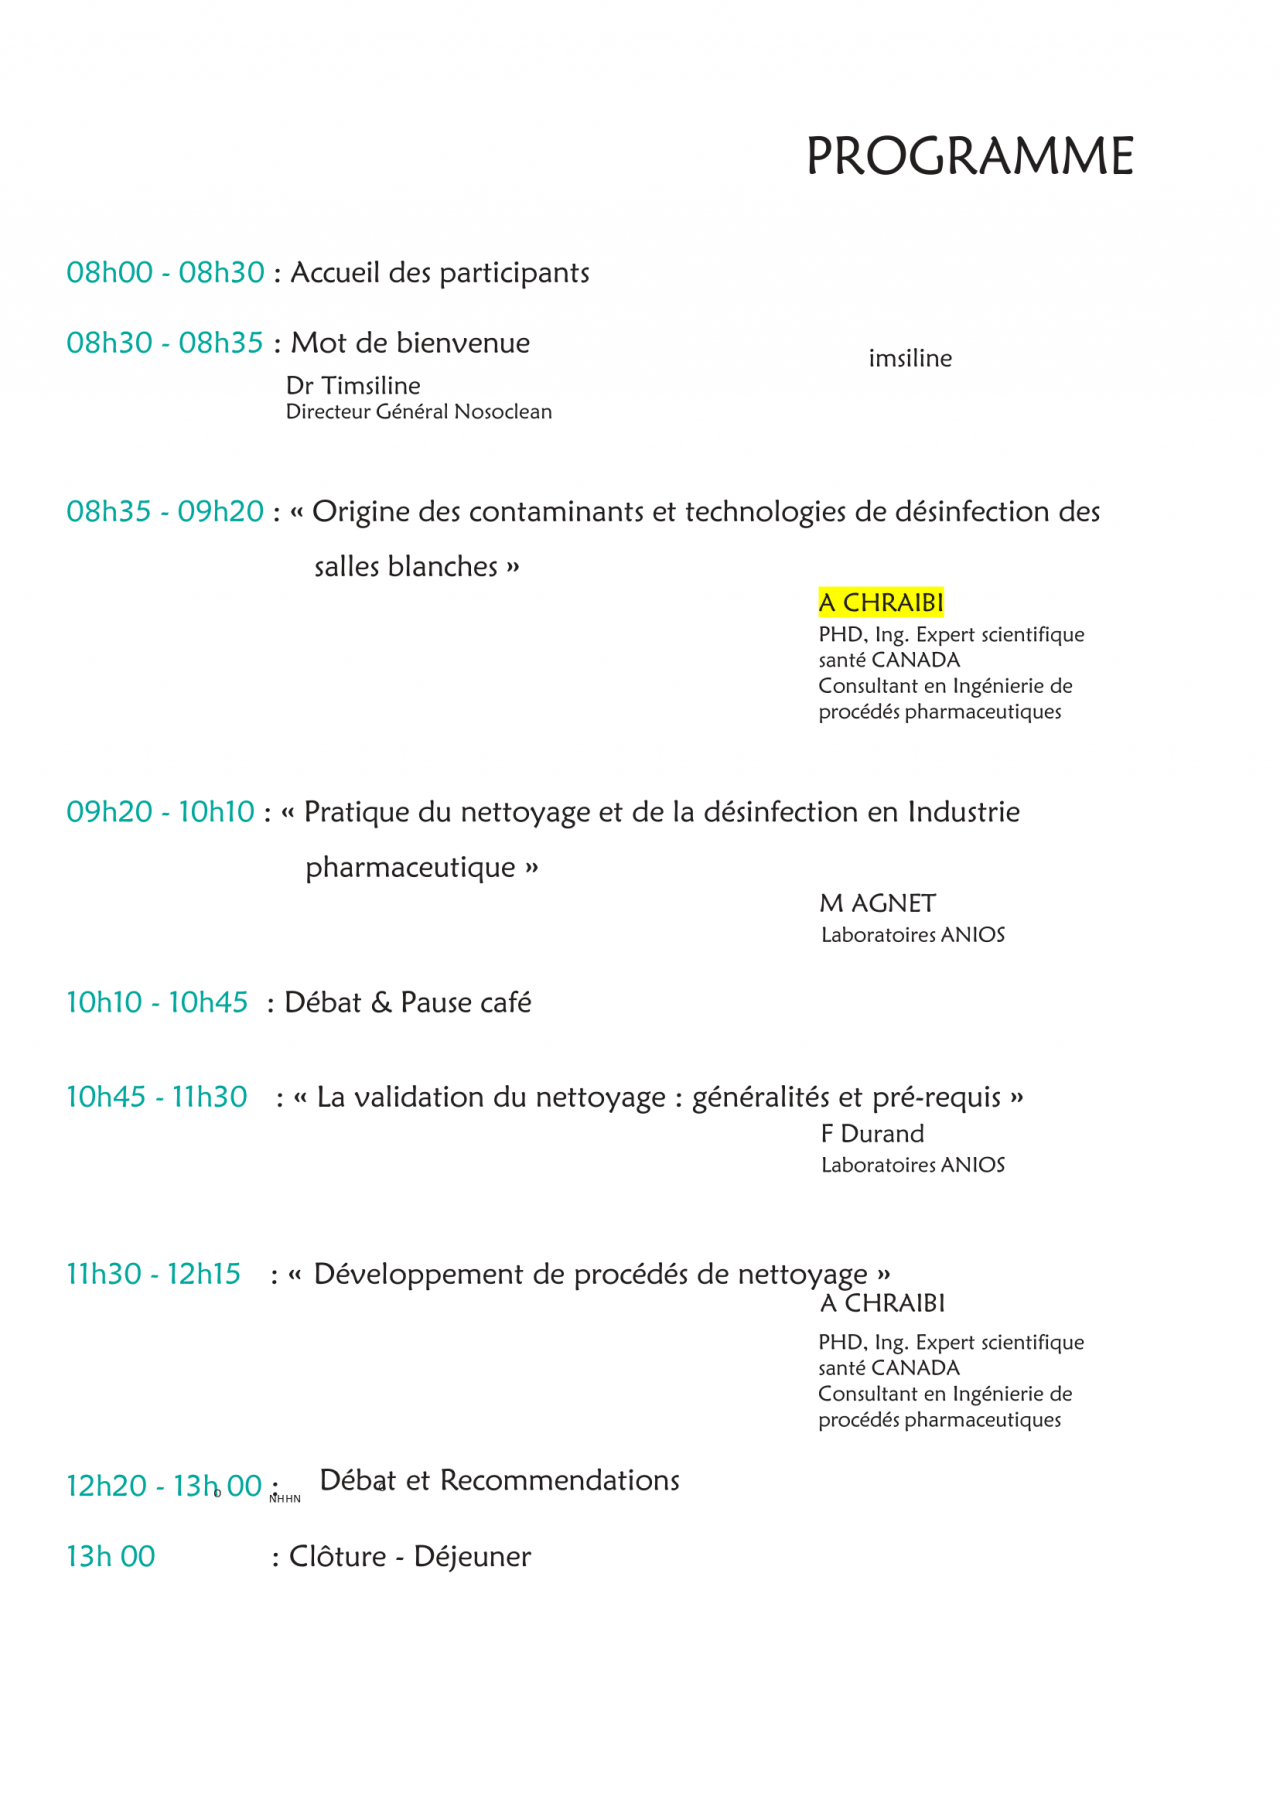 PBE - Programme NOSCLEAN Pharma 12 Nov 2013-1